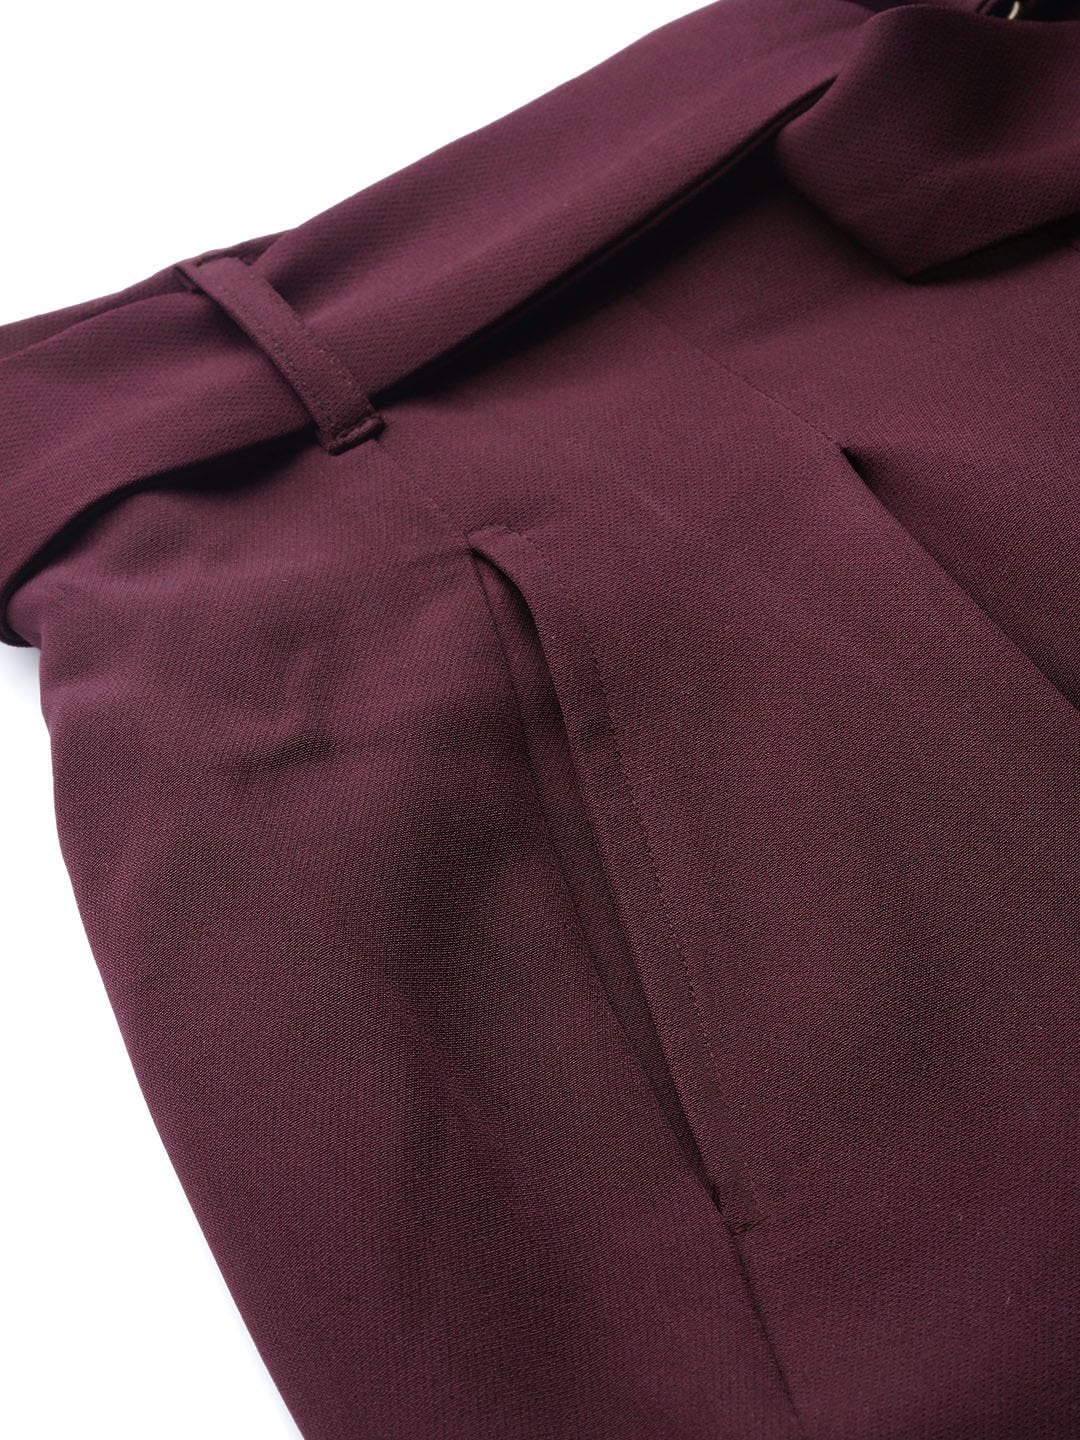 Women's Burgundy Front Pleat Tapered Pants - SASSAFRAS